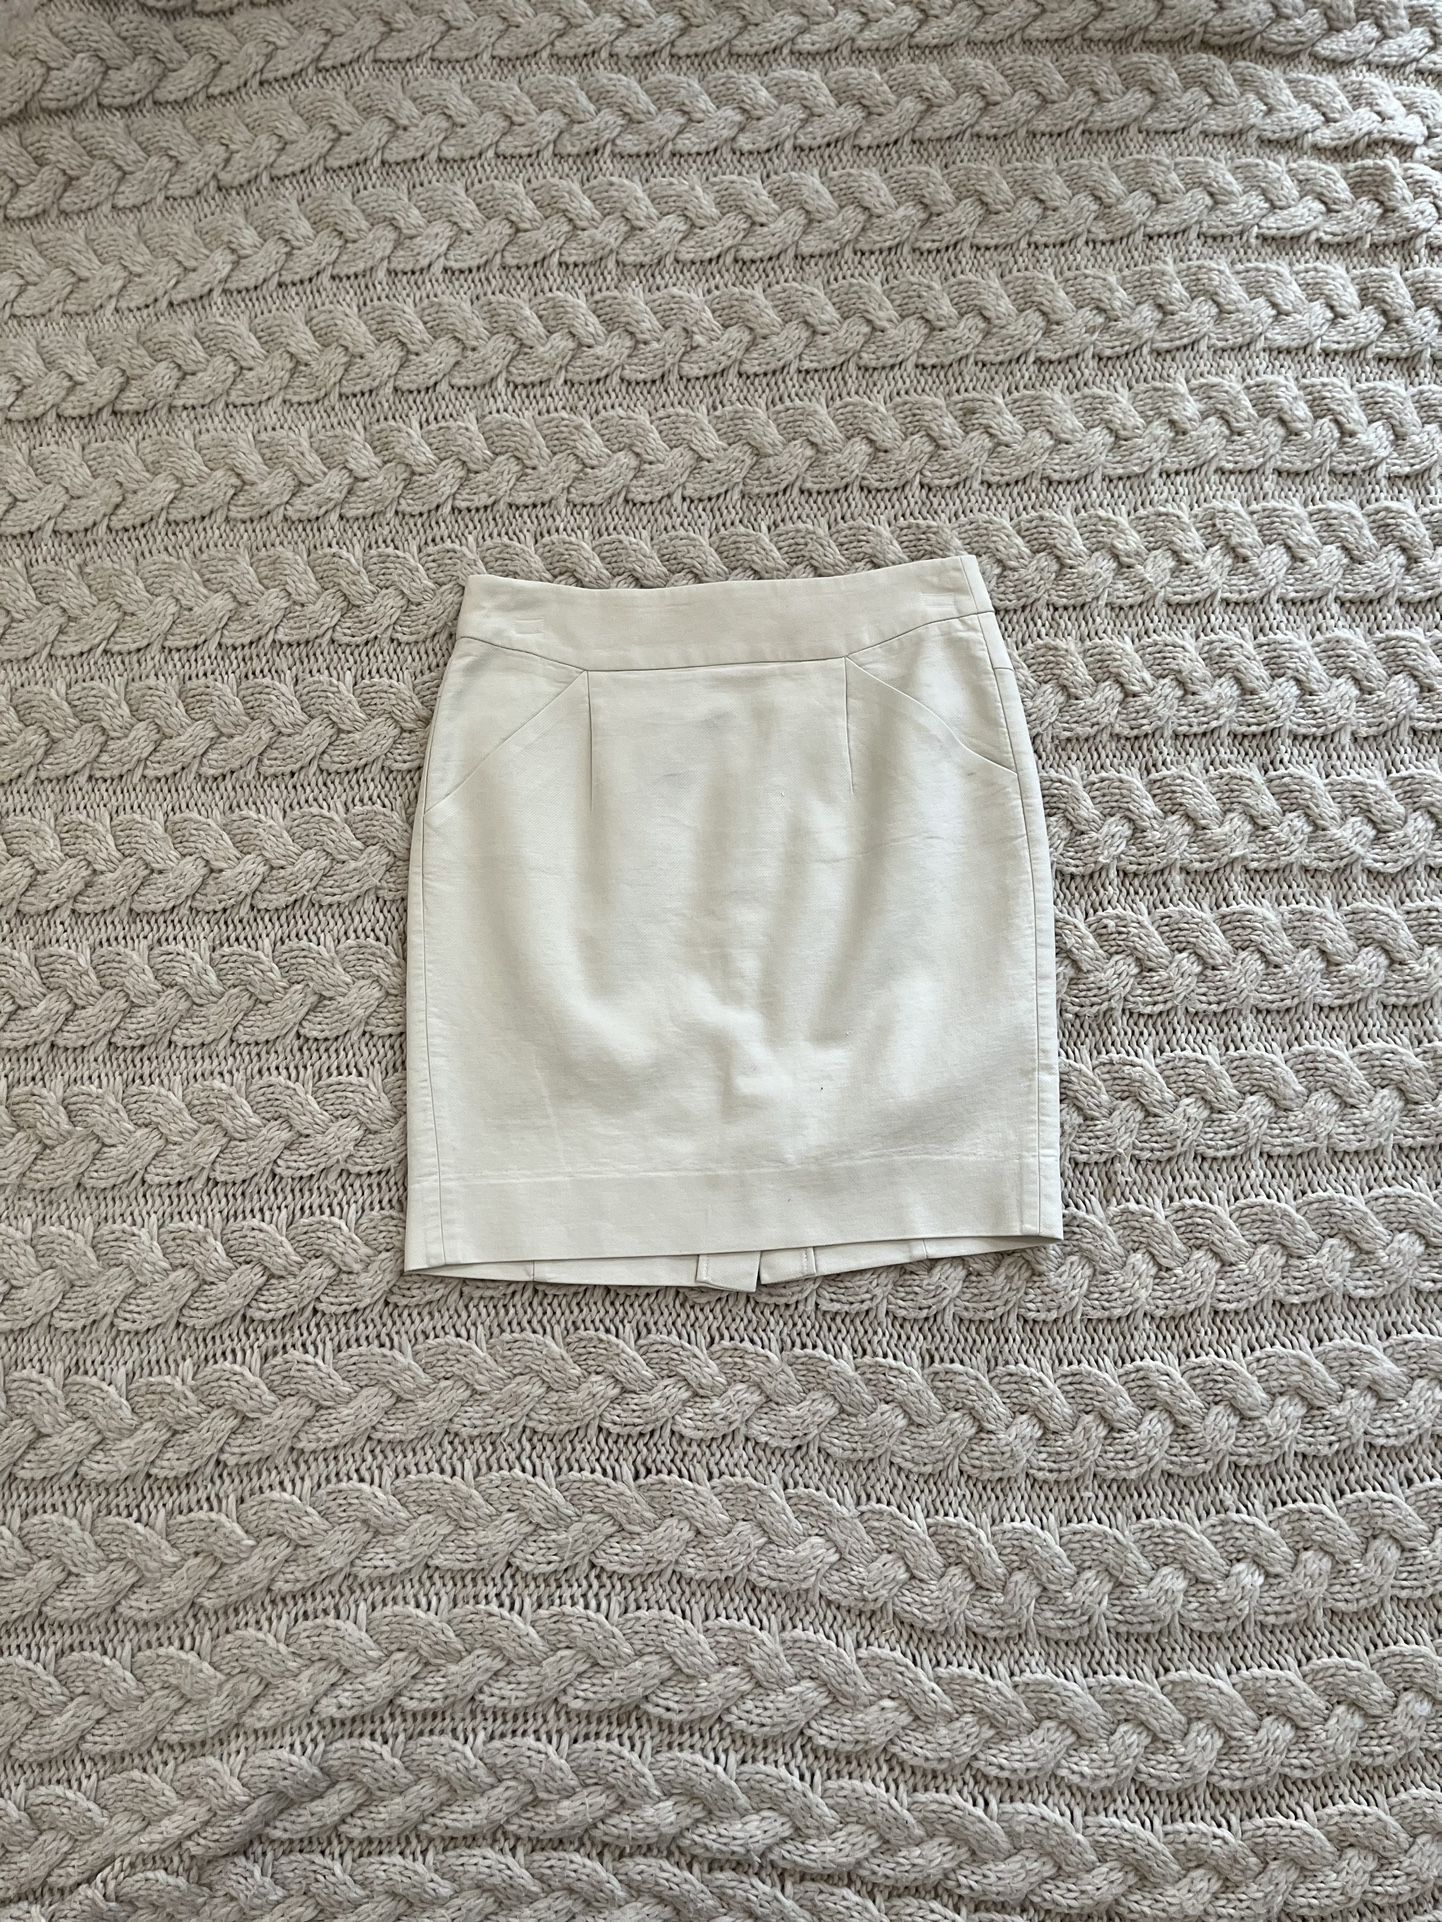 J.Crew beige pencil skirt, size 2